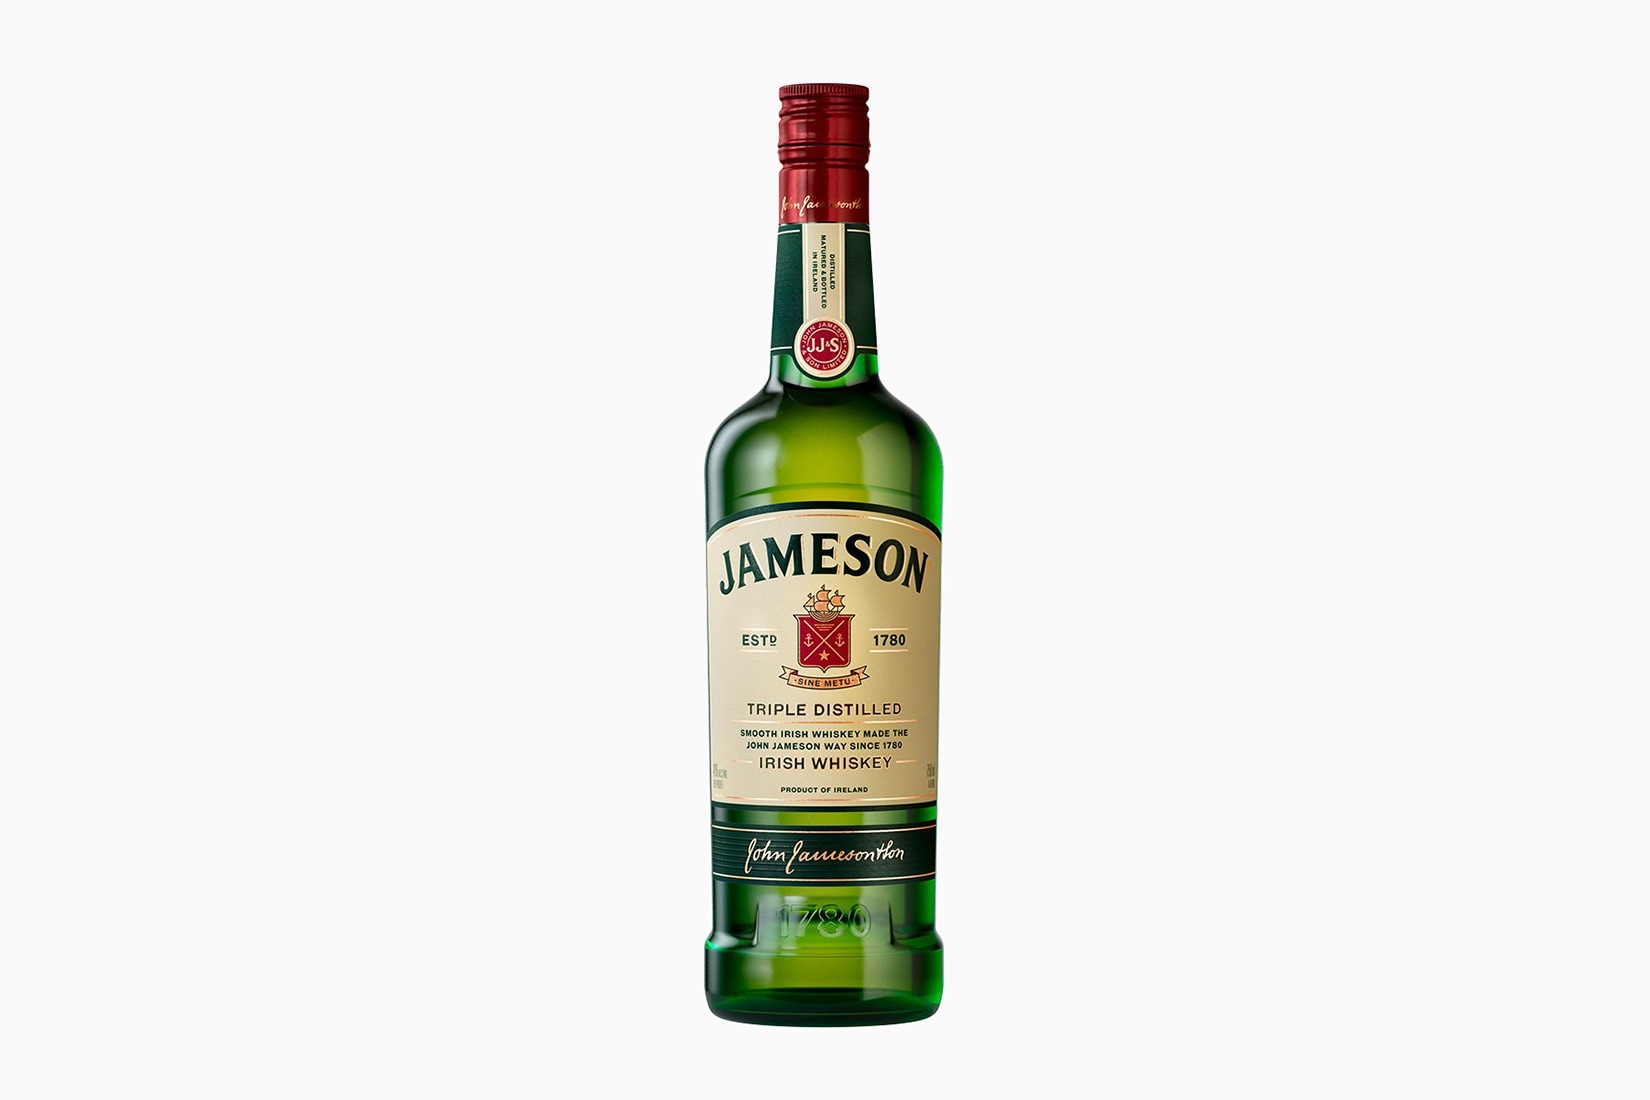 jameson whiskey bottle price size - Luxe Digital